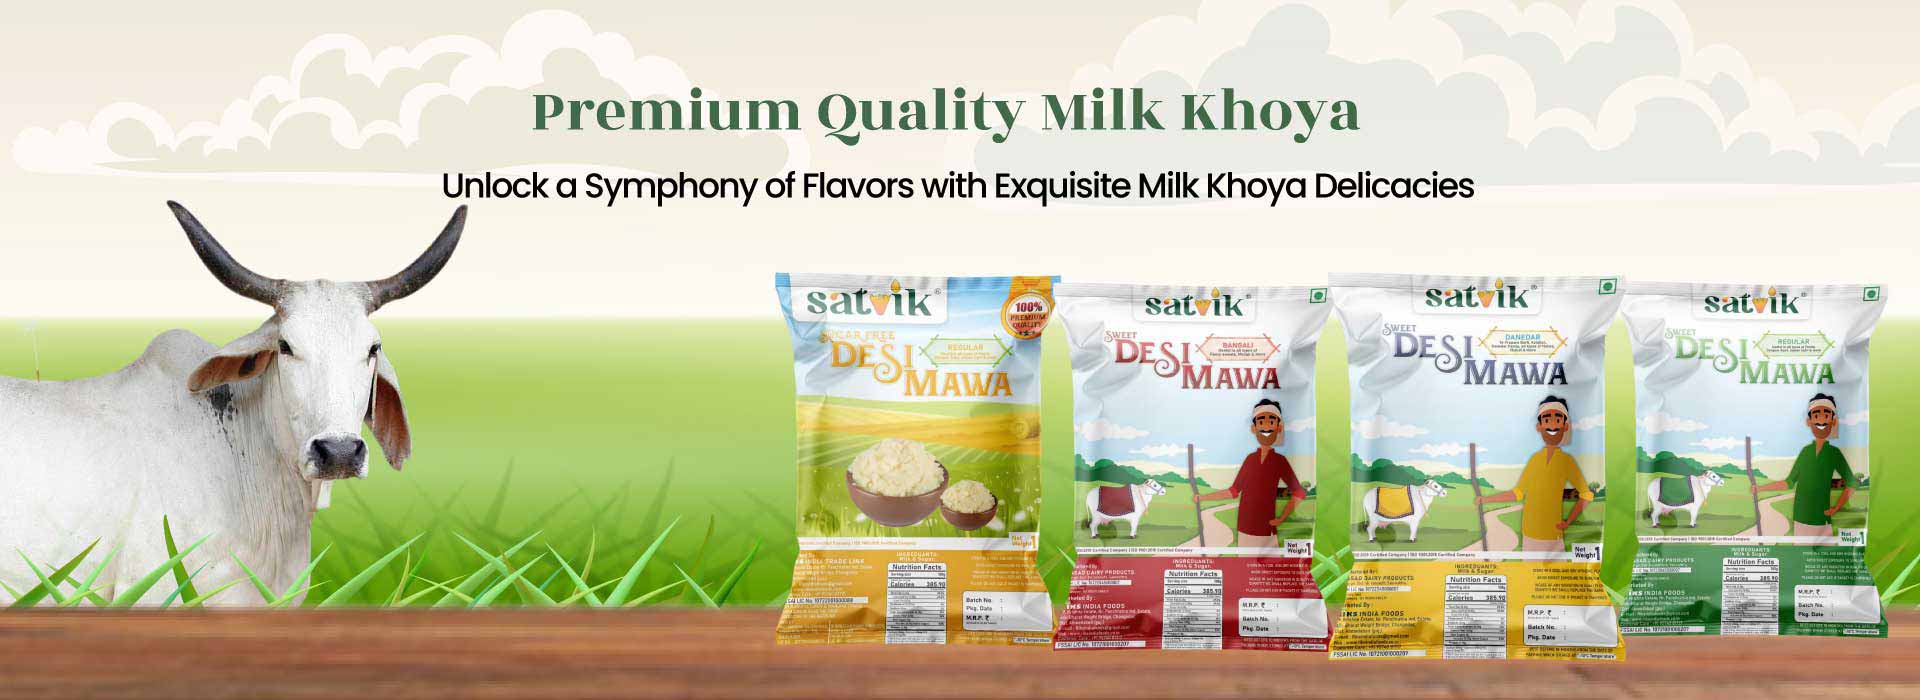 Premium Quality Milk Khoya Manufacturers in Ahmedabad